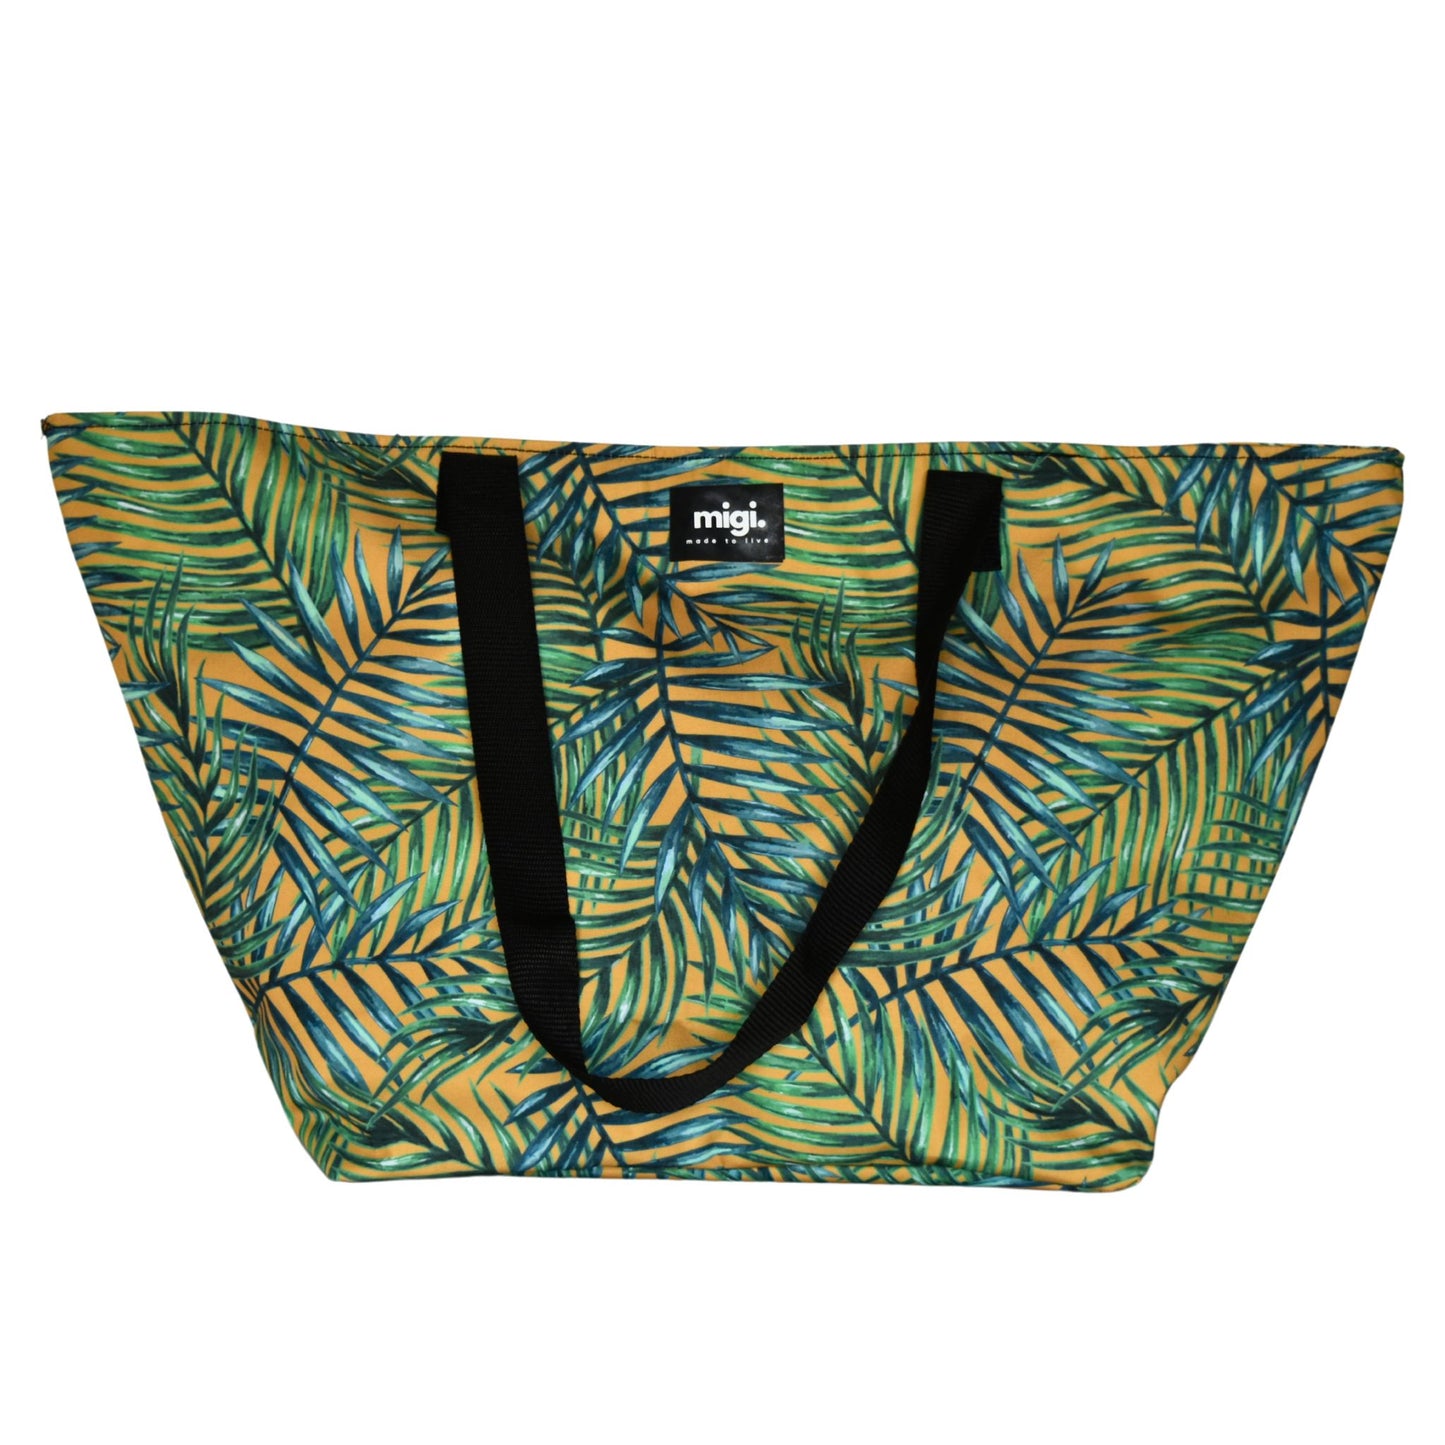 Sunset Palm Forest Go-Go Bag